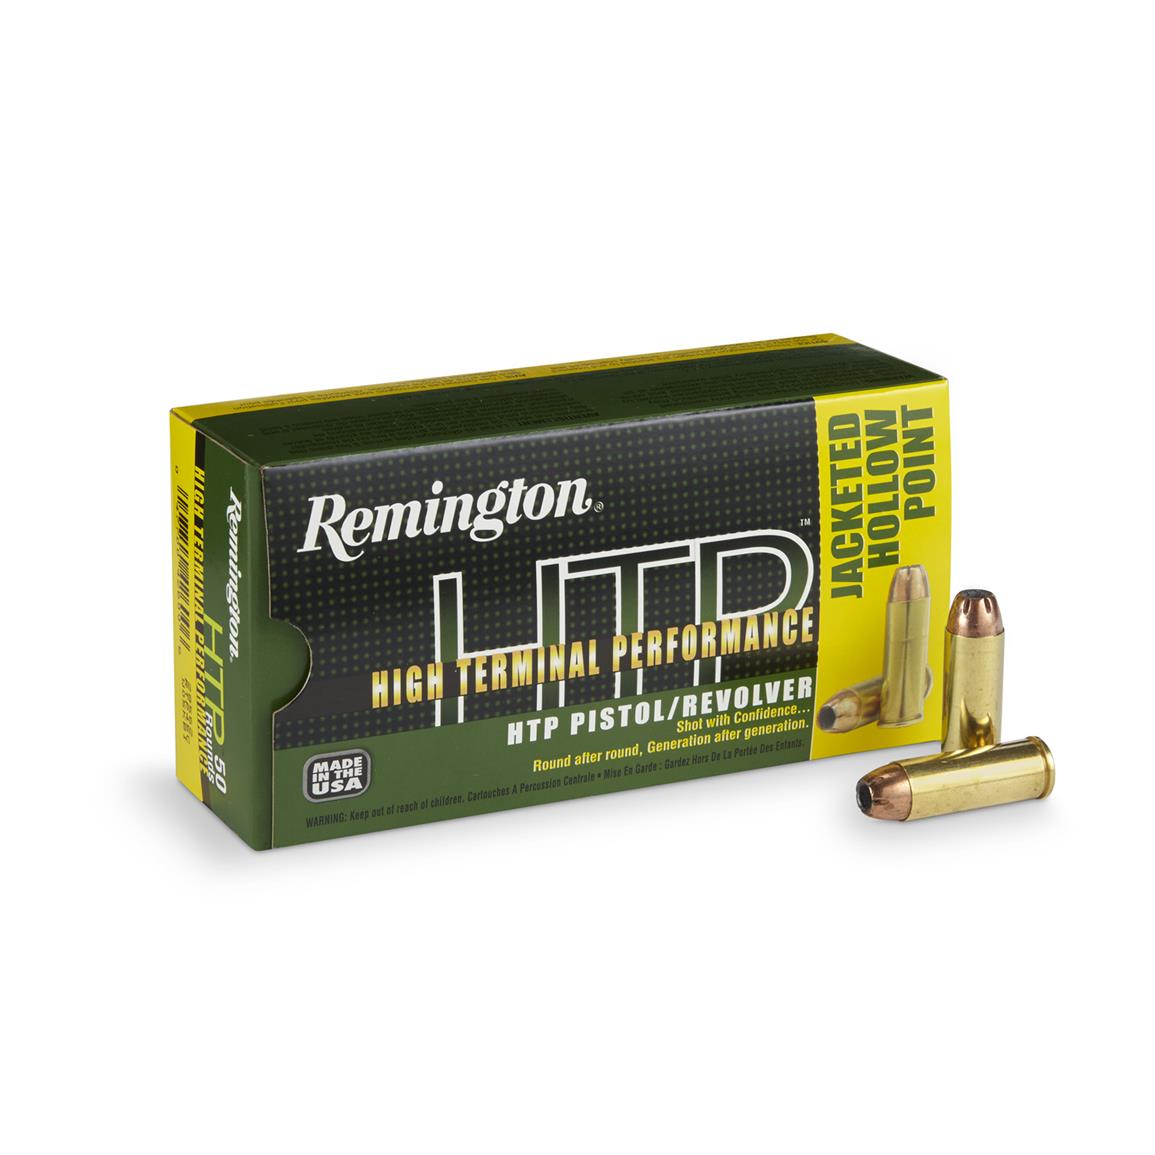 Remington, .45 Colt, JHP, High Terminal Performance, 230 Grain, 50 Rounds